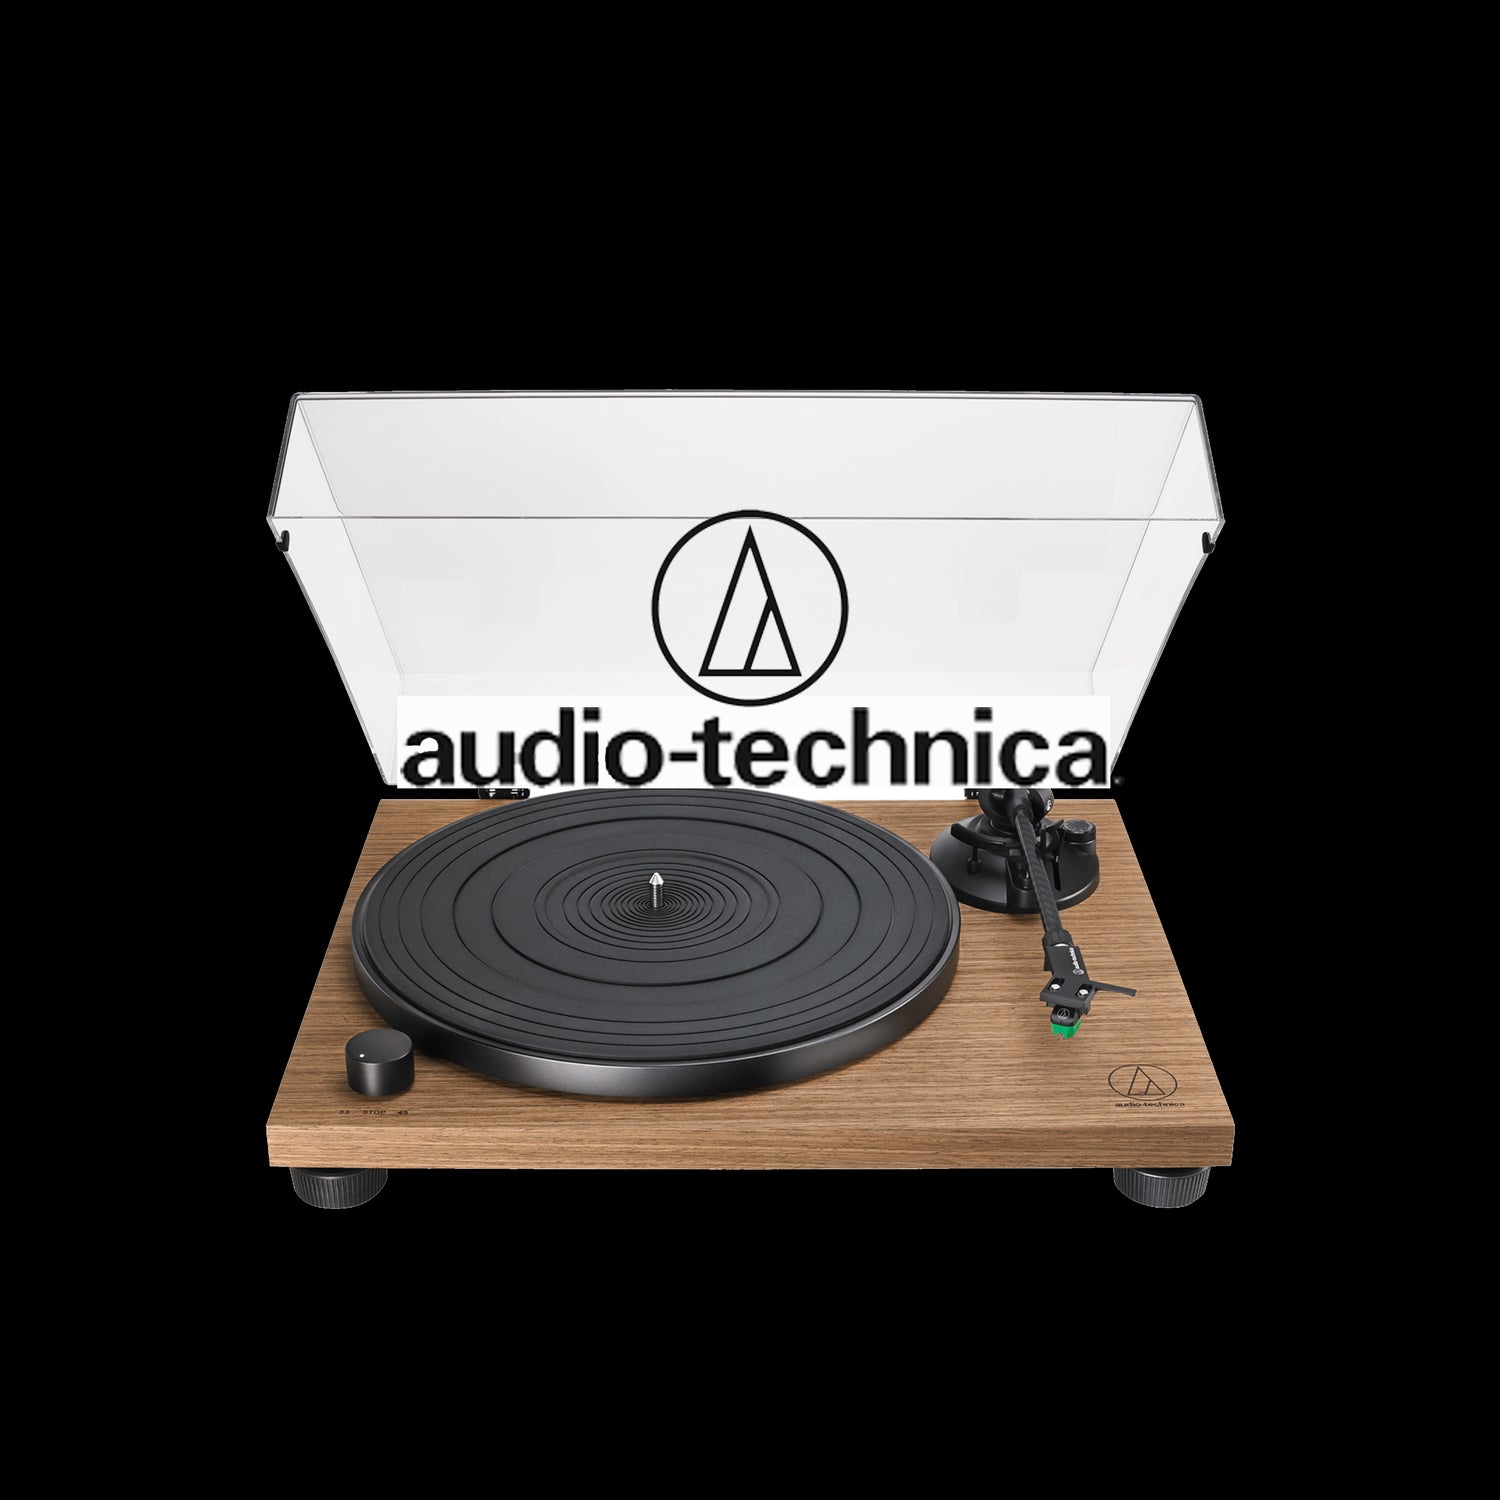 Audiotechnica Turntables